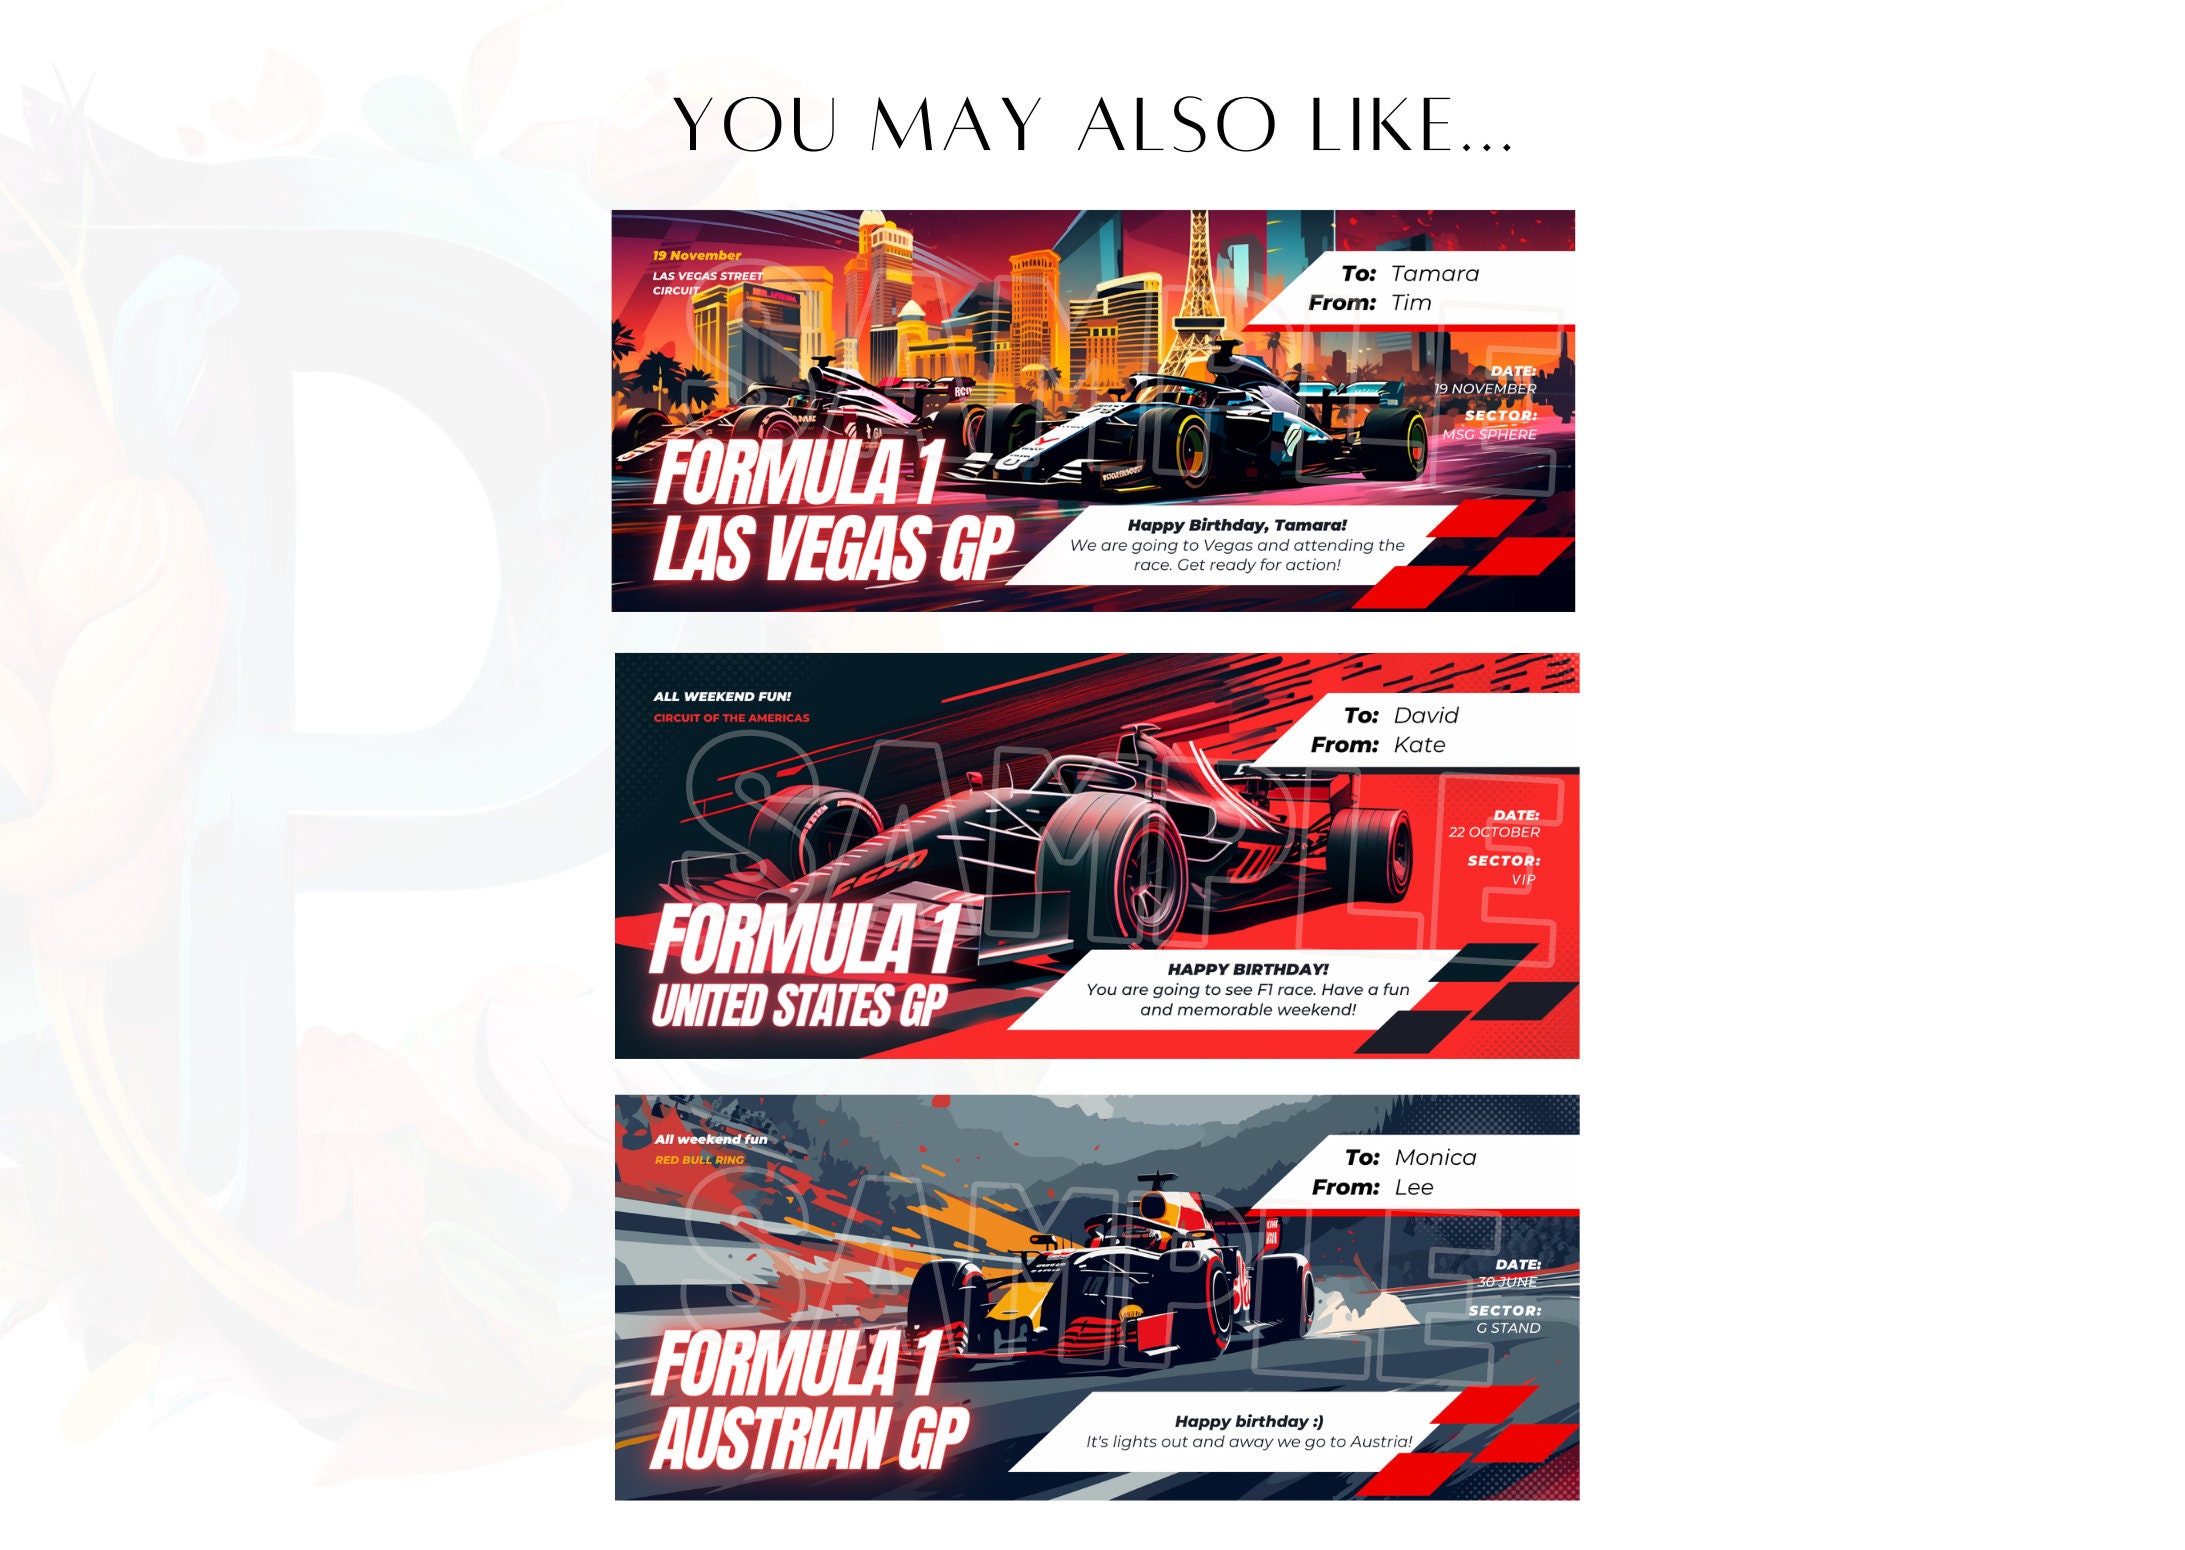 How to Get Presale Tickets to Formula 1 Grand Prix Las Vegas - Grimy Goods